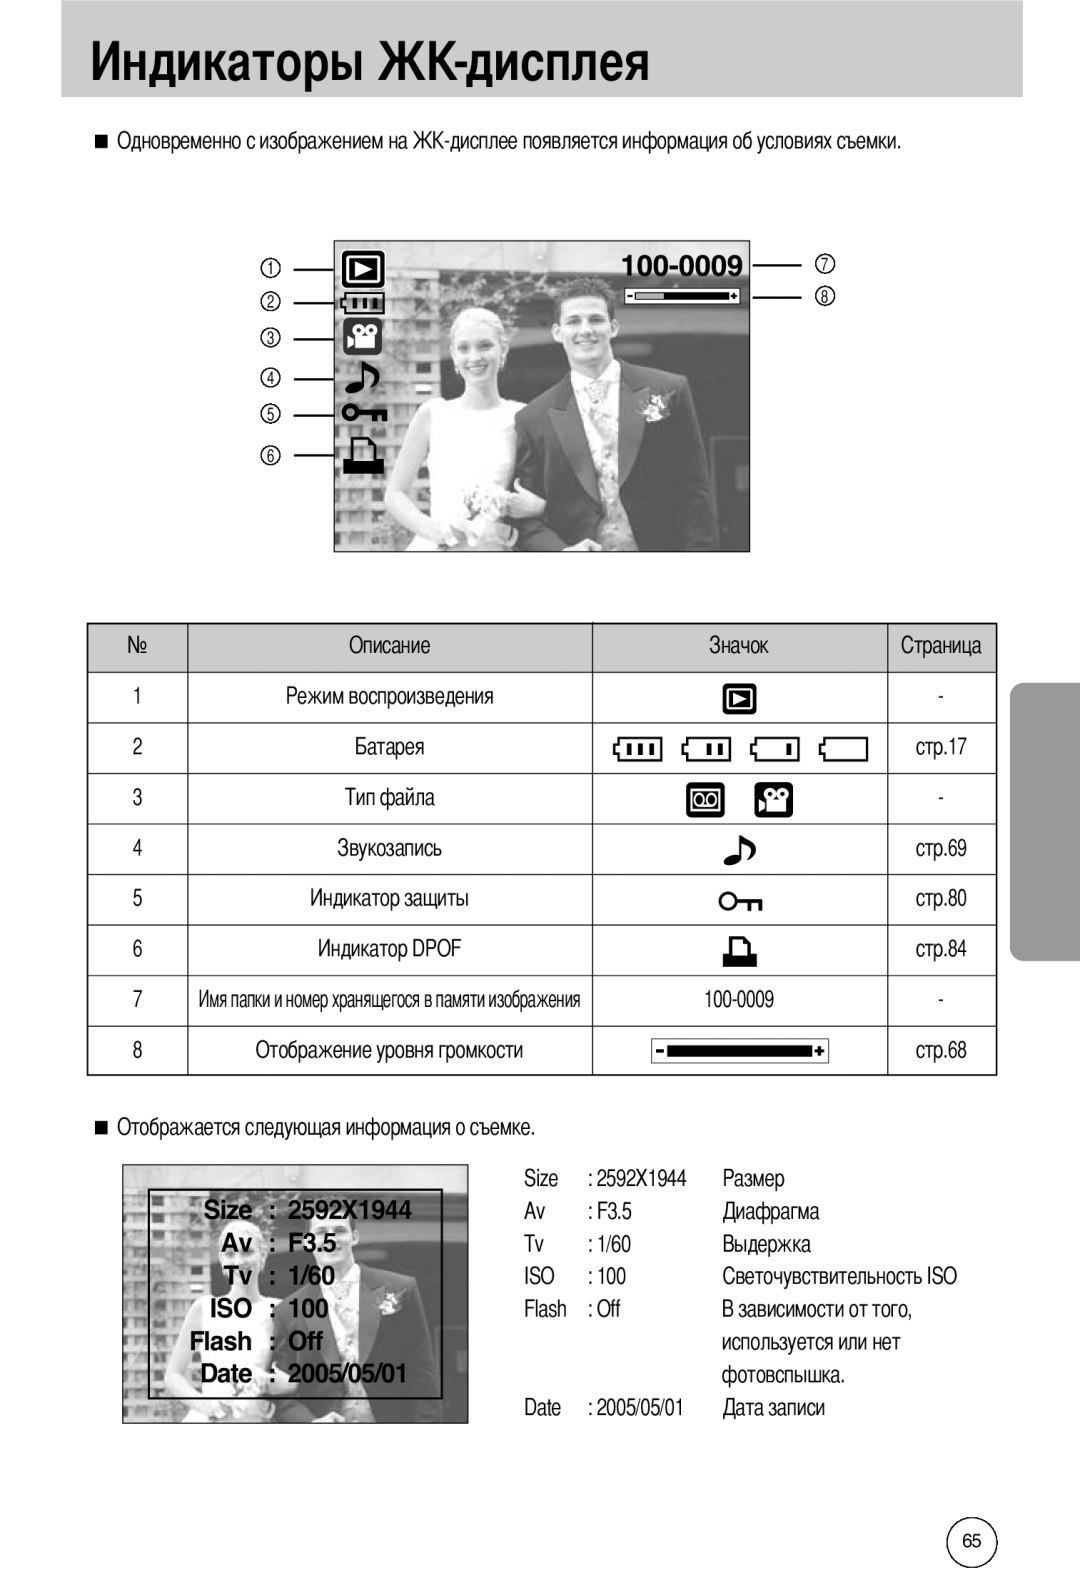 Samsung EC-I50ZZBBA/GB manual дисплея, Size Av F3.5 Tv 1/60 ISO Flash Off Date 2005/05/01, Отображение уровня громкости 